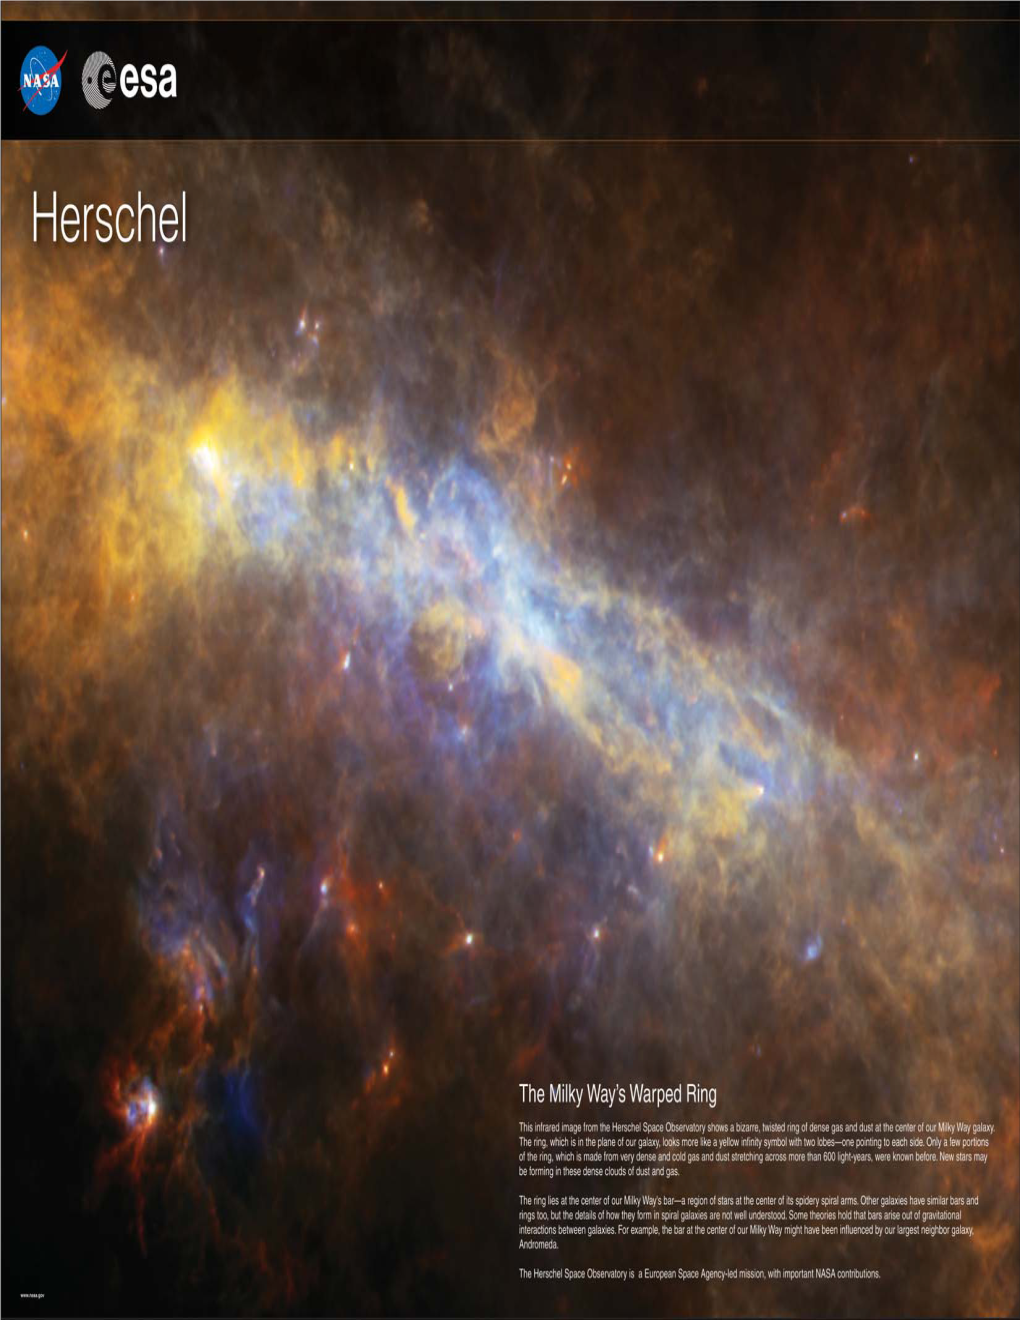 Herschel Space Observatory